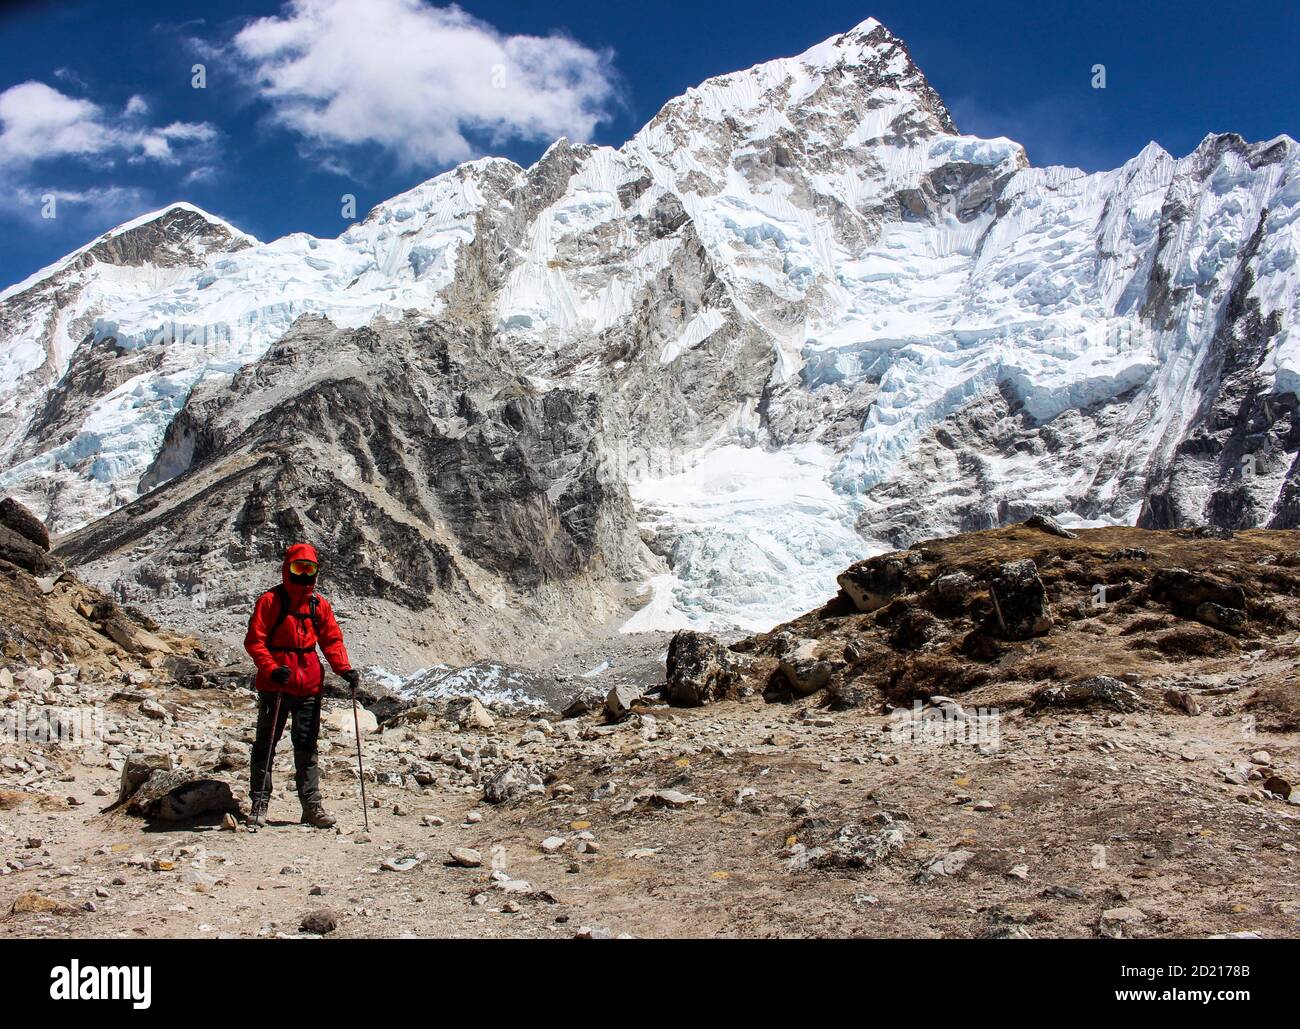 Trekker near Gorakshep on his way to Mount Everest base camp. Stock Photo